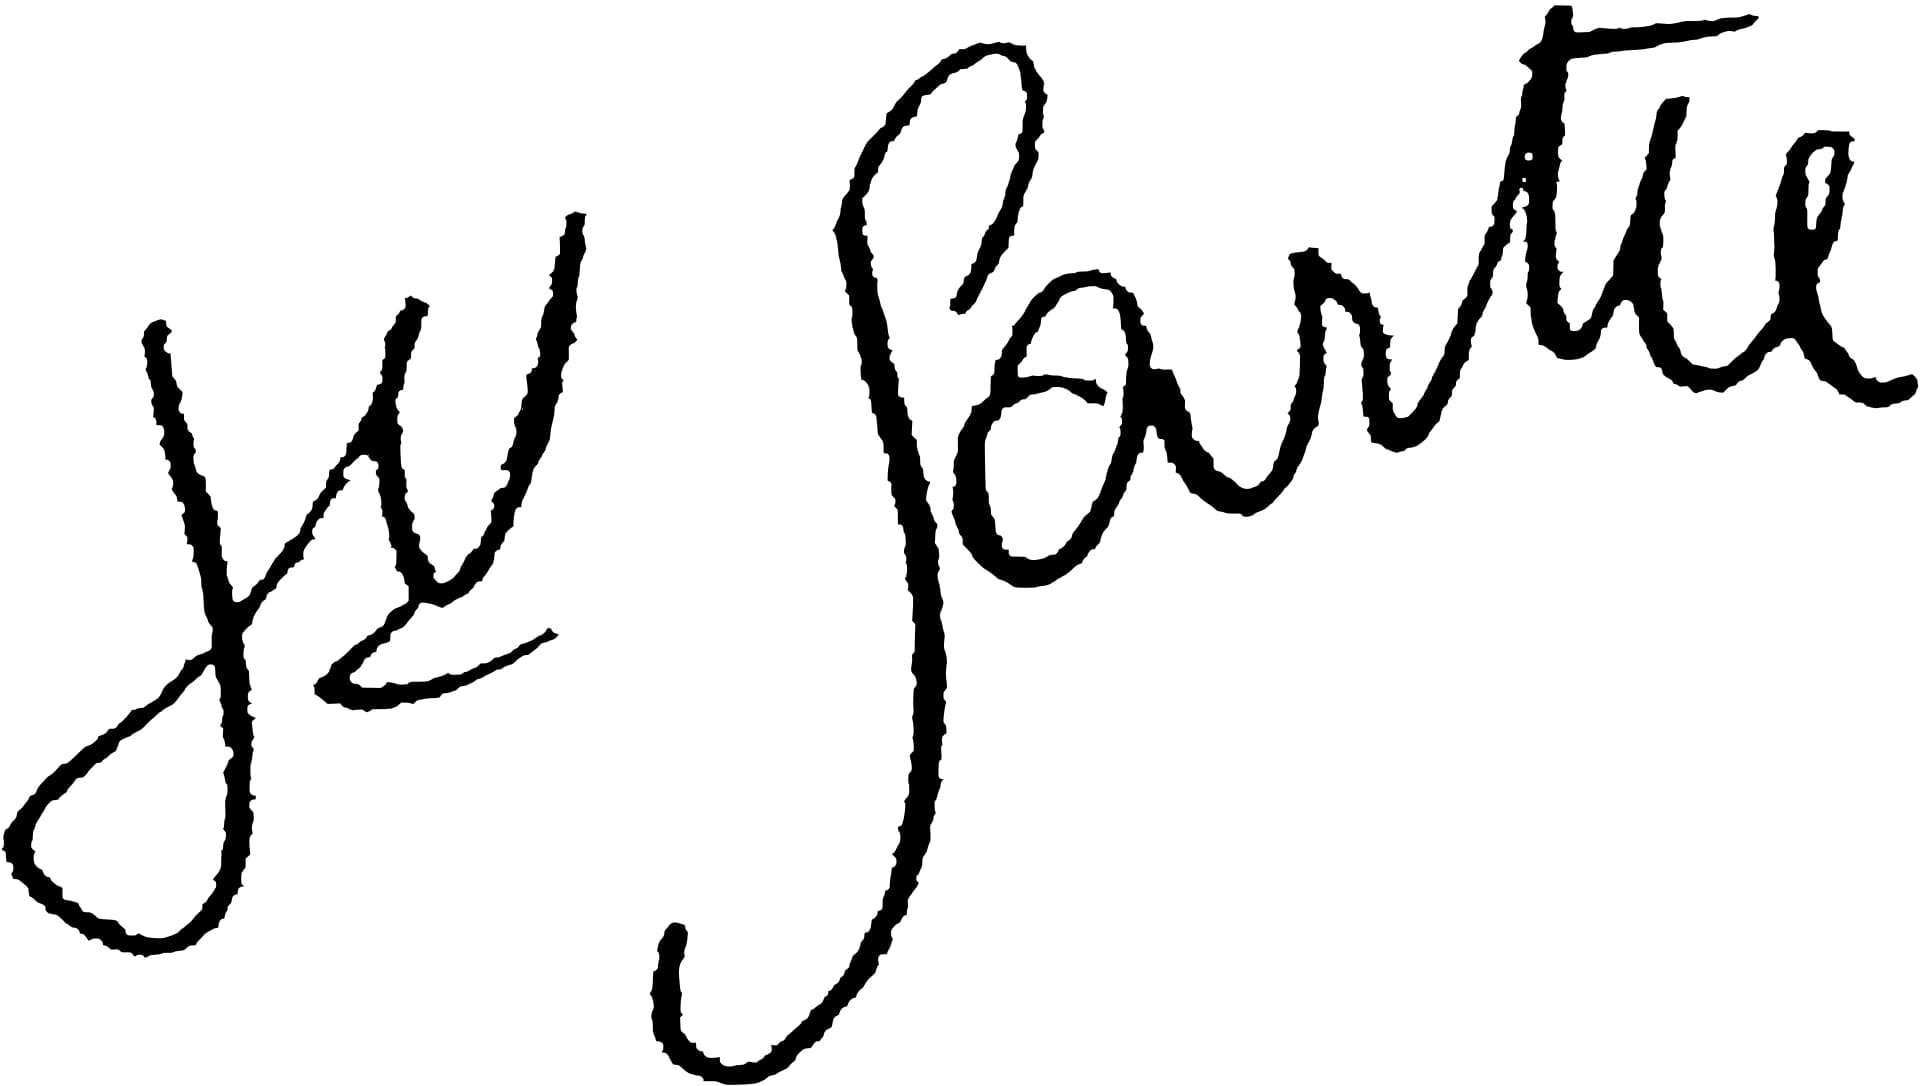 Jean-Paul Sartre Signature